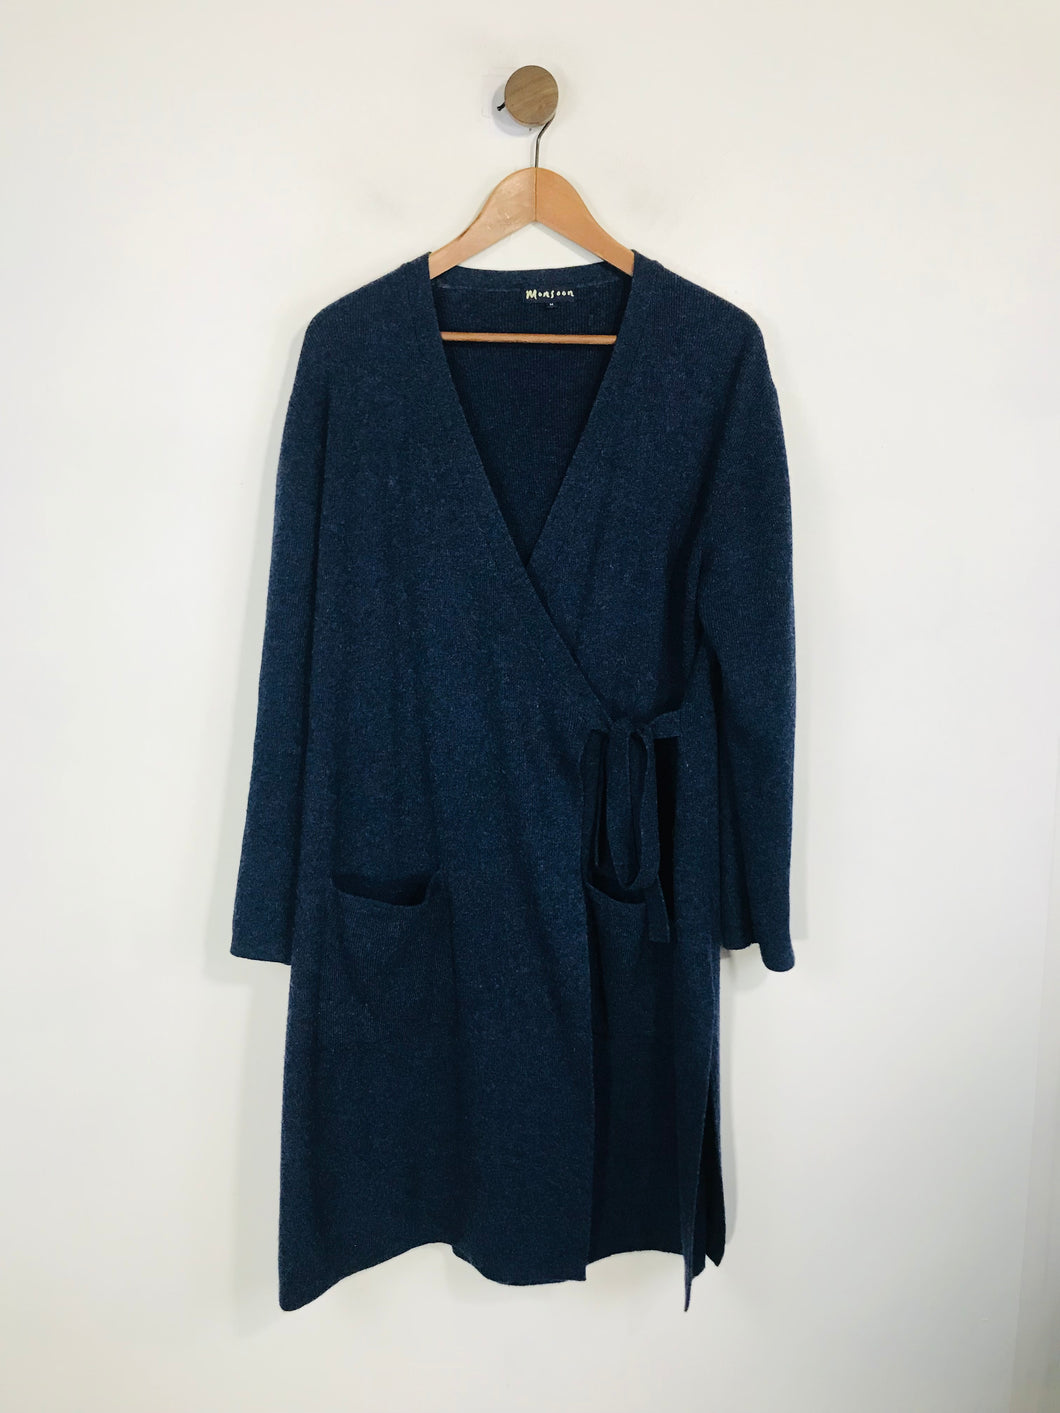 Monsoon Women's Knit Long Cardigan | M UK10-12 | Blue